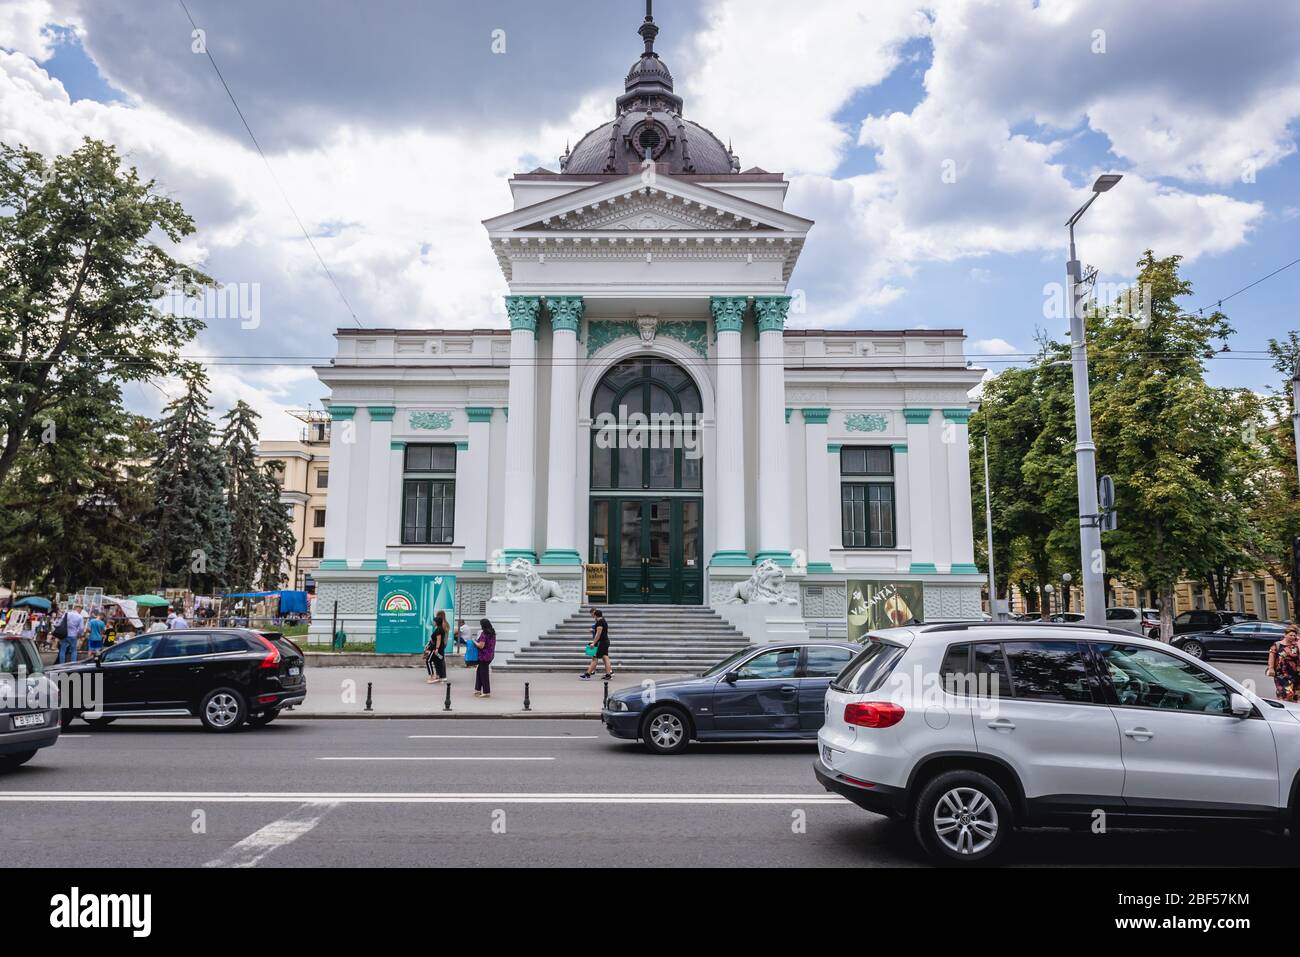 Sala cu Orga - Organ Hall building on Stefan cel Mare si Sfant Boulevard in Chisinau, capital of the Republic of Moldova Stock Photo